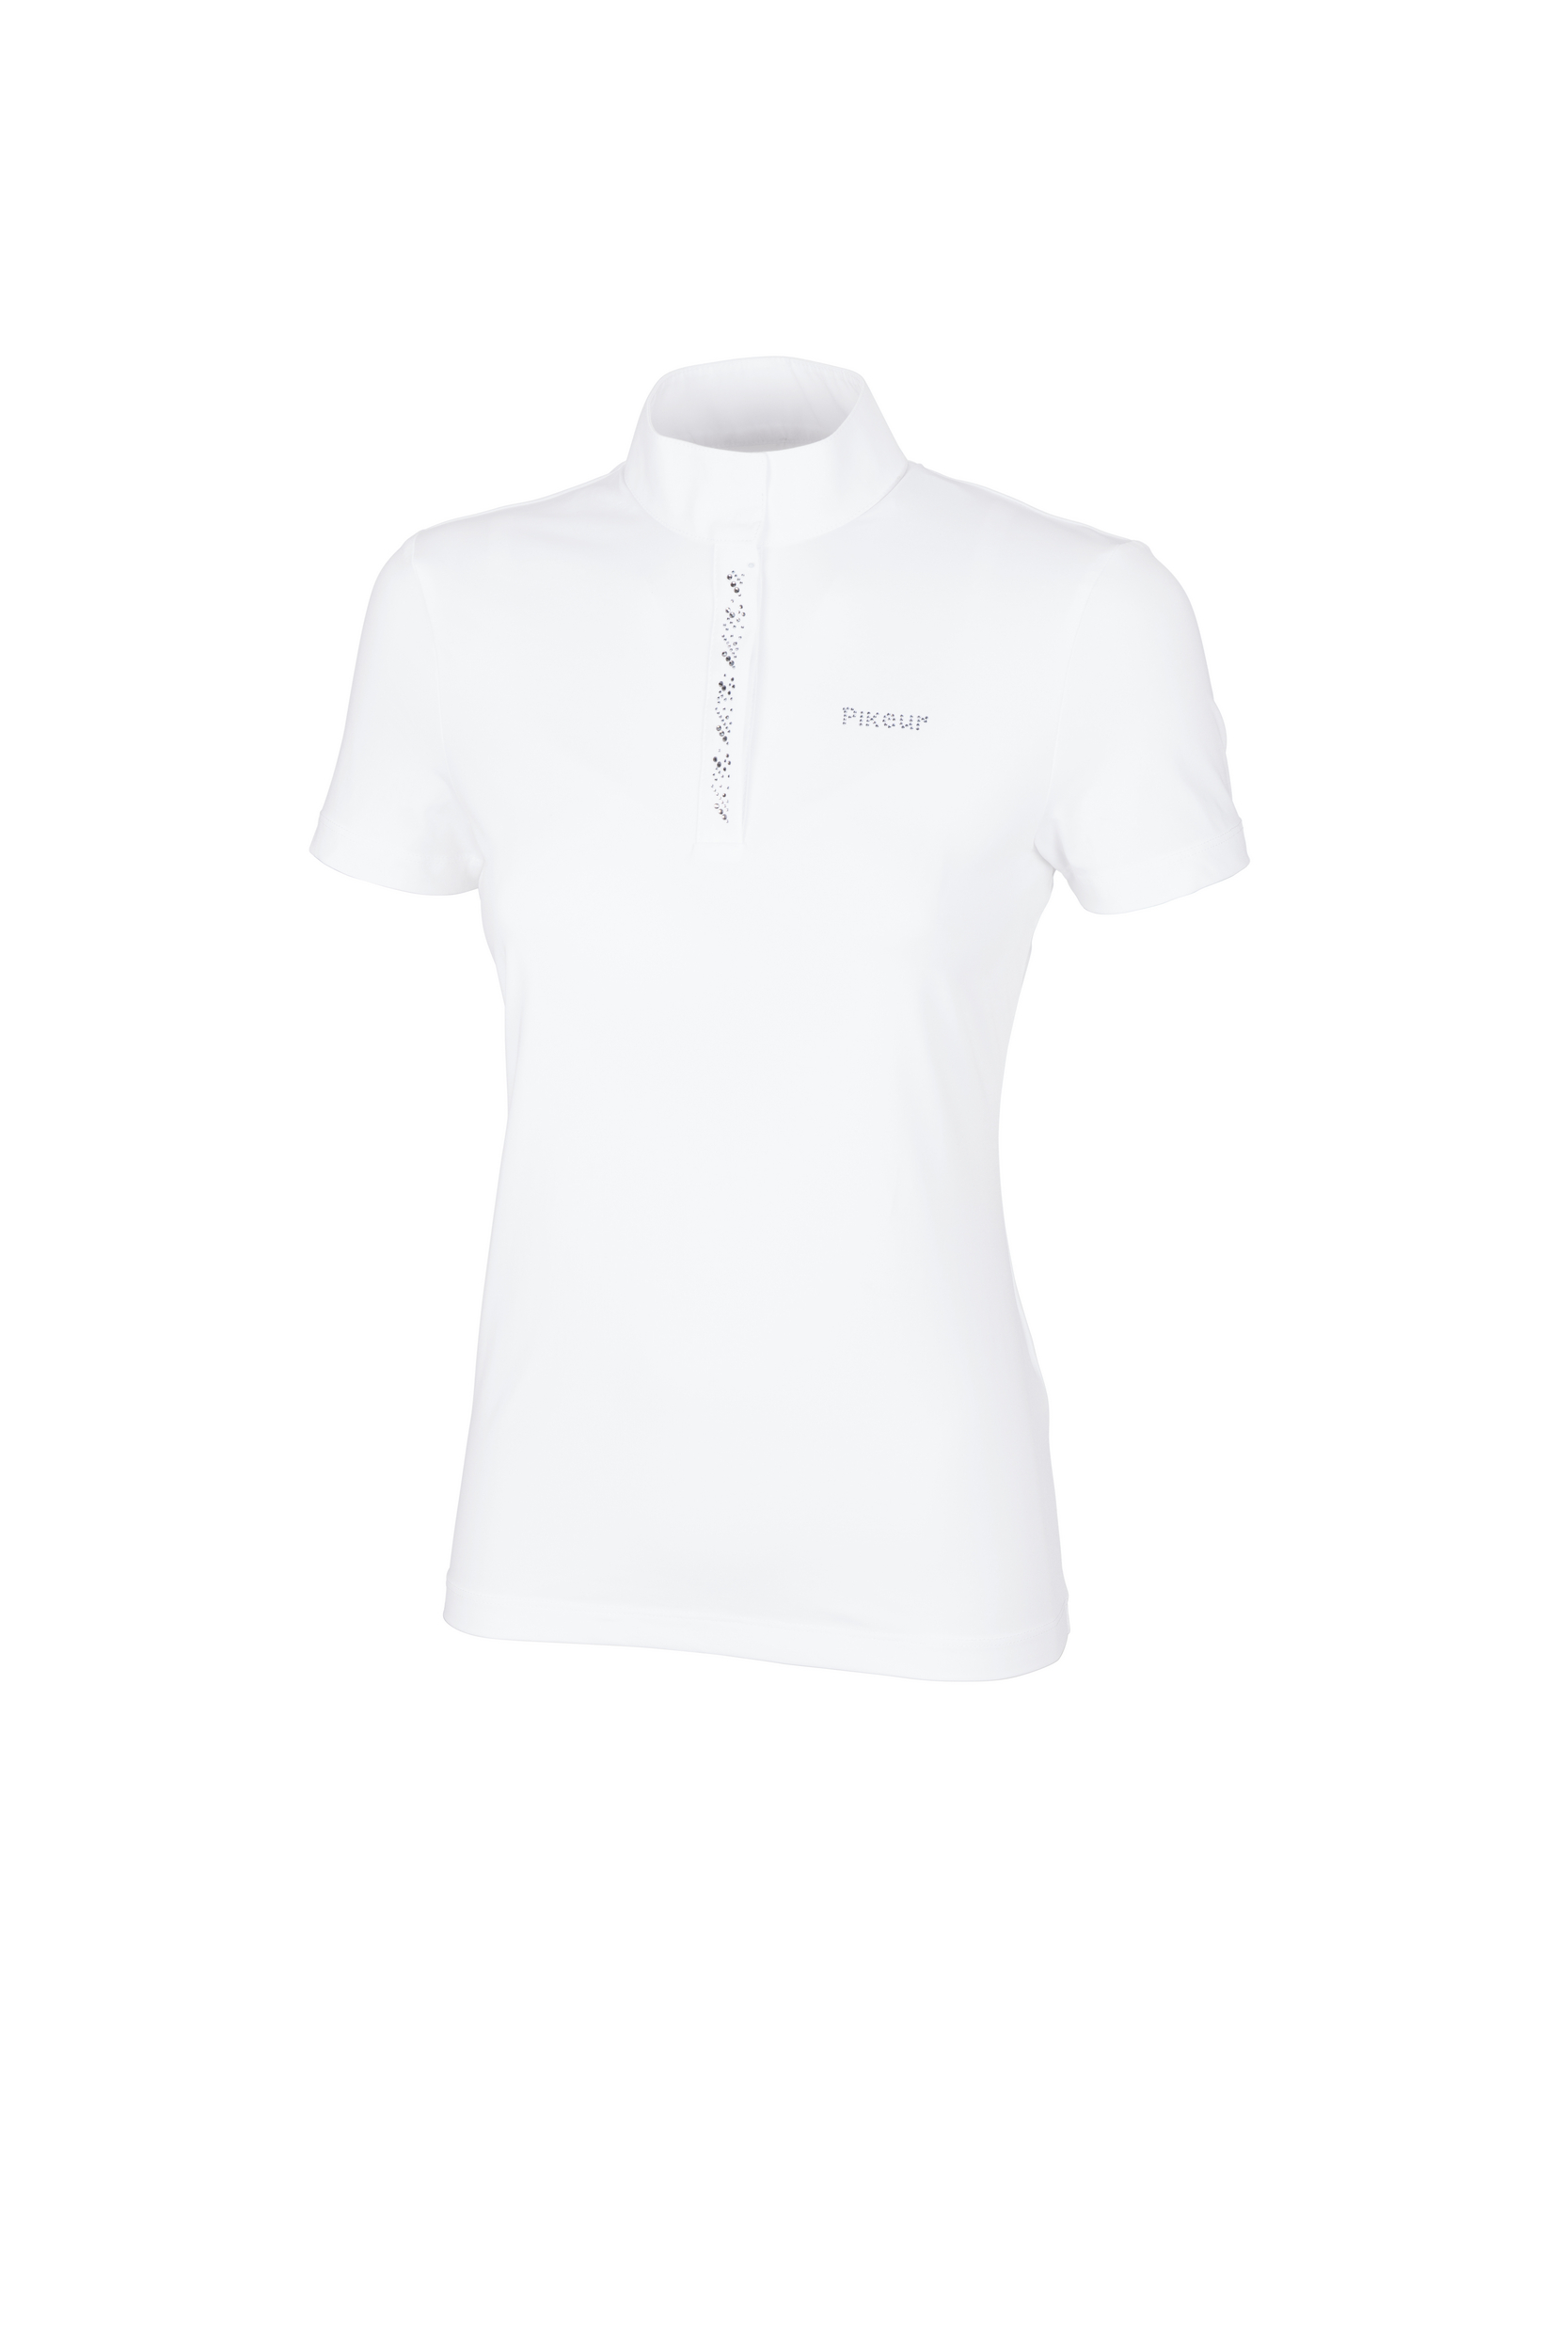 Pikeur Competition Shirt - Valkoinen (42)